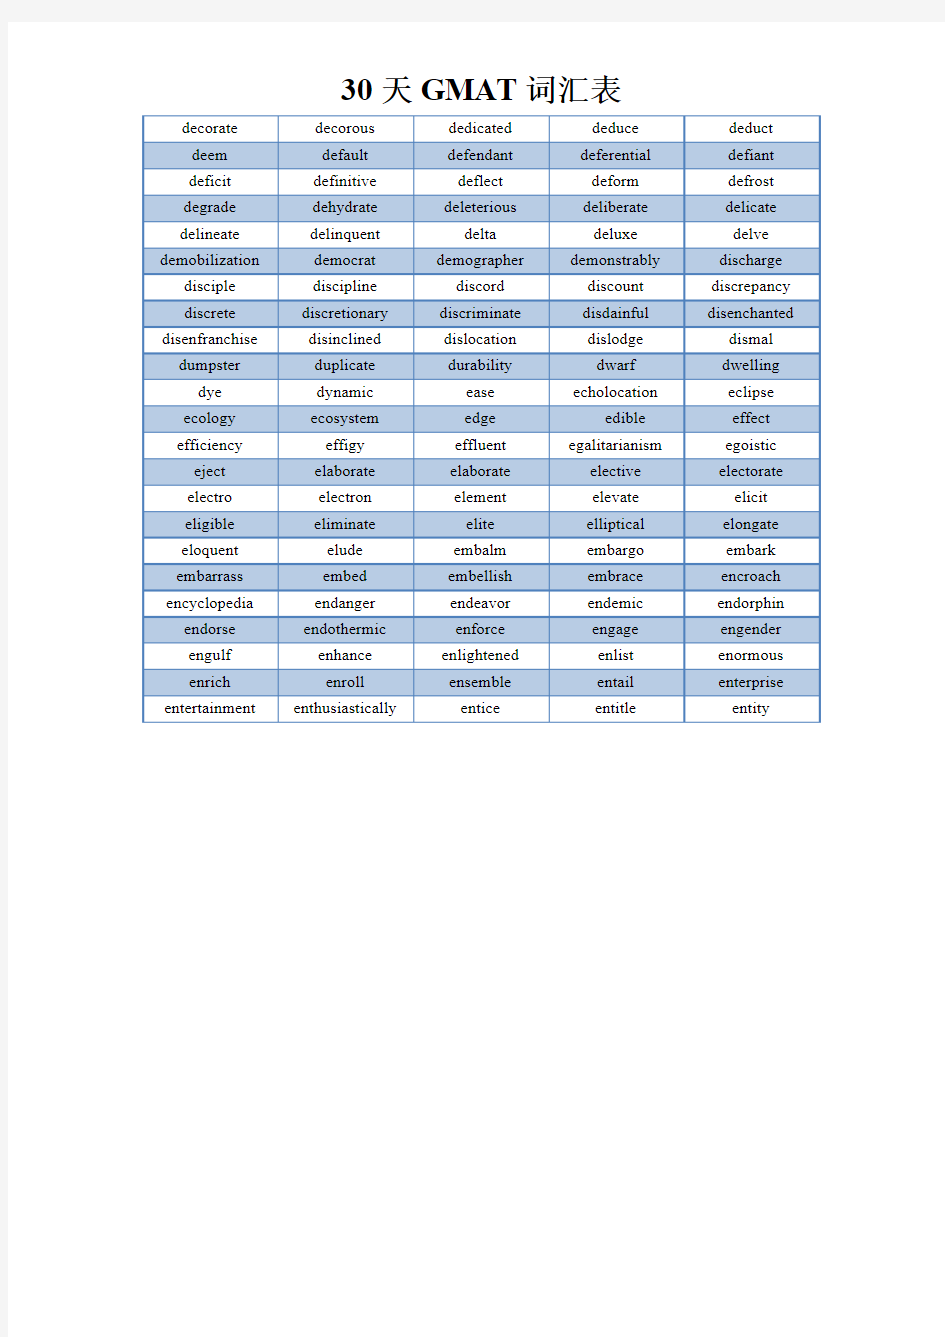 GMAT词汇检测表(List 1)